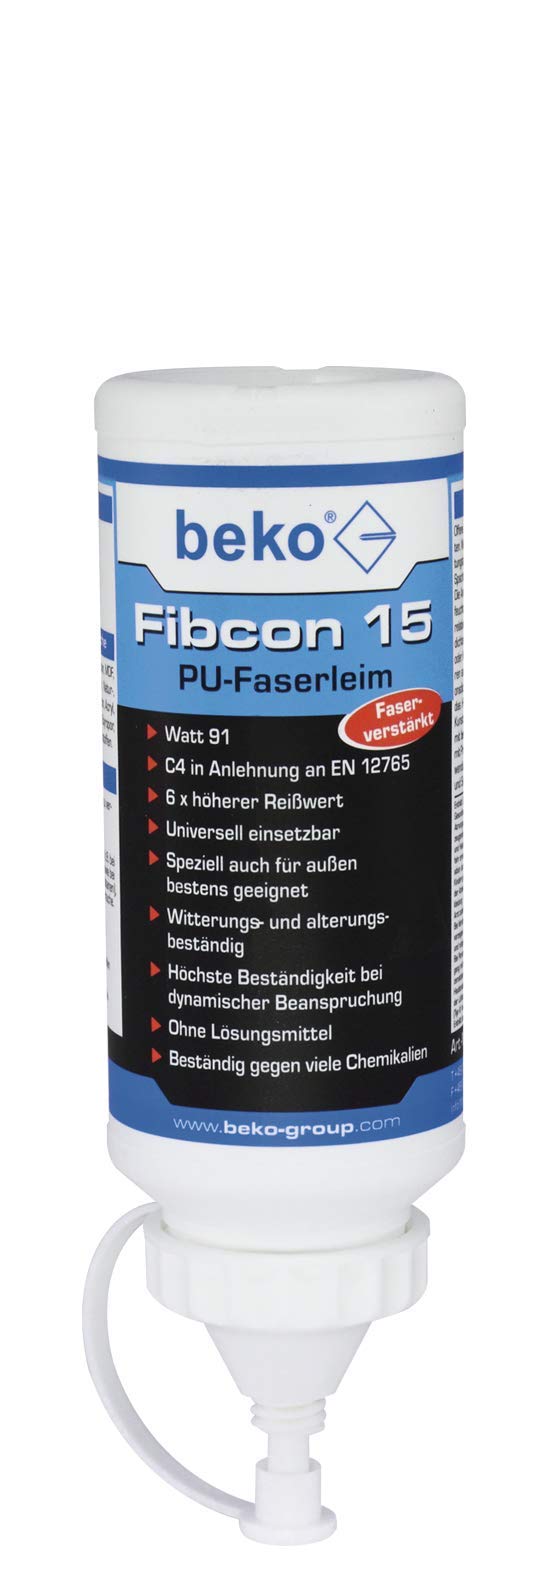 beko Fibcon 15 PU-Faserleim 500g 260 100 501